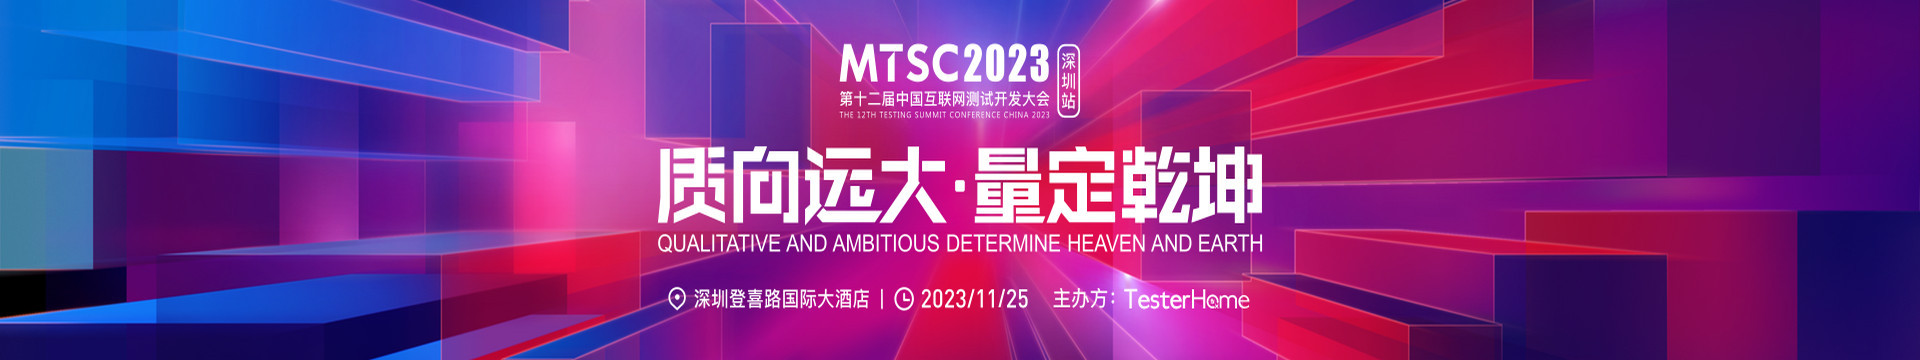 MTSC2023中國互聯網測試開發大會 - 深圳站